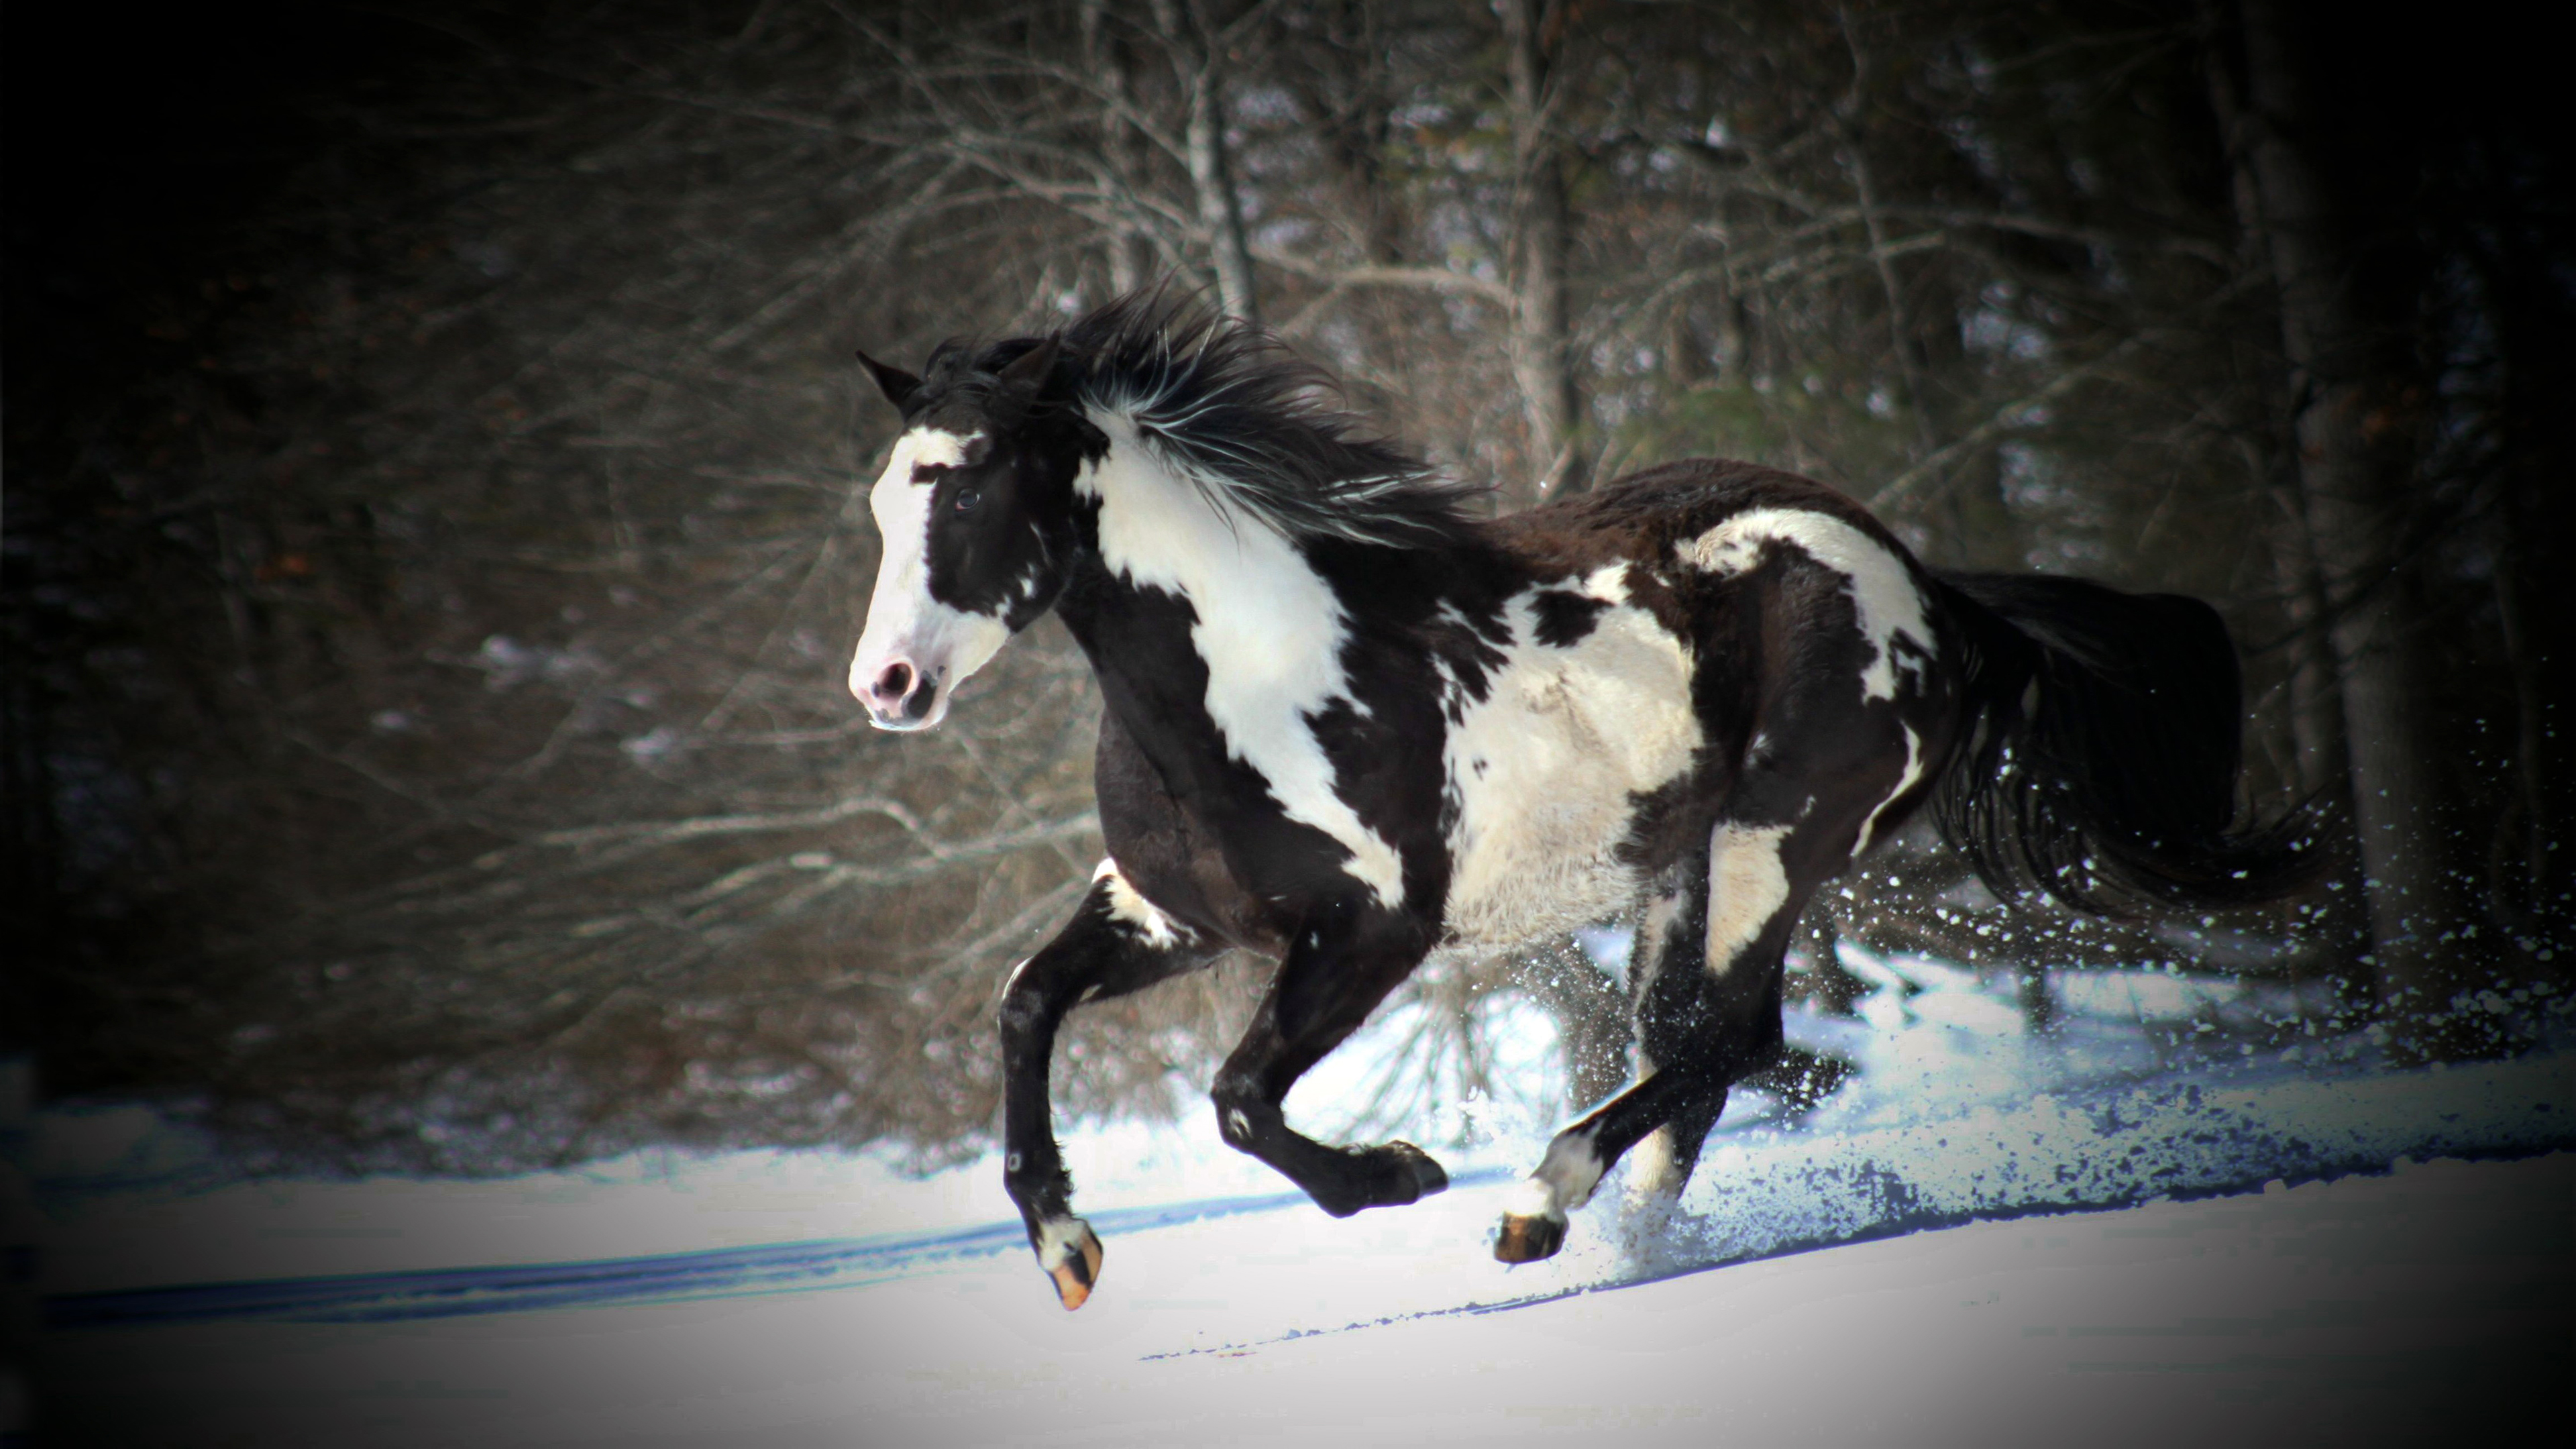 Black And White Horse Running In Snow Desktop Wallpaper Backgrounds